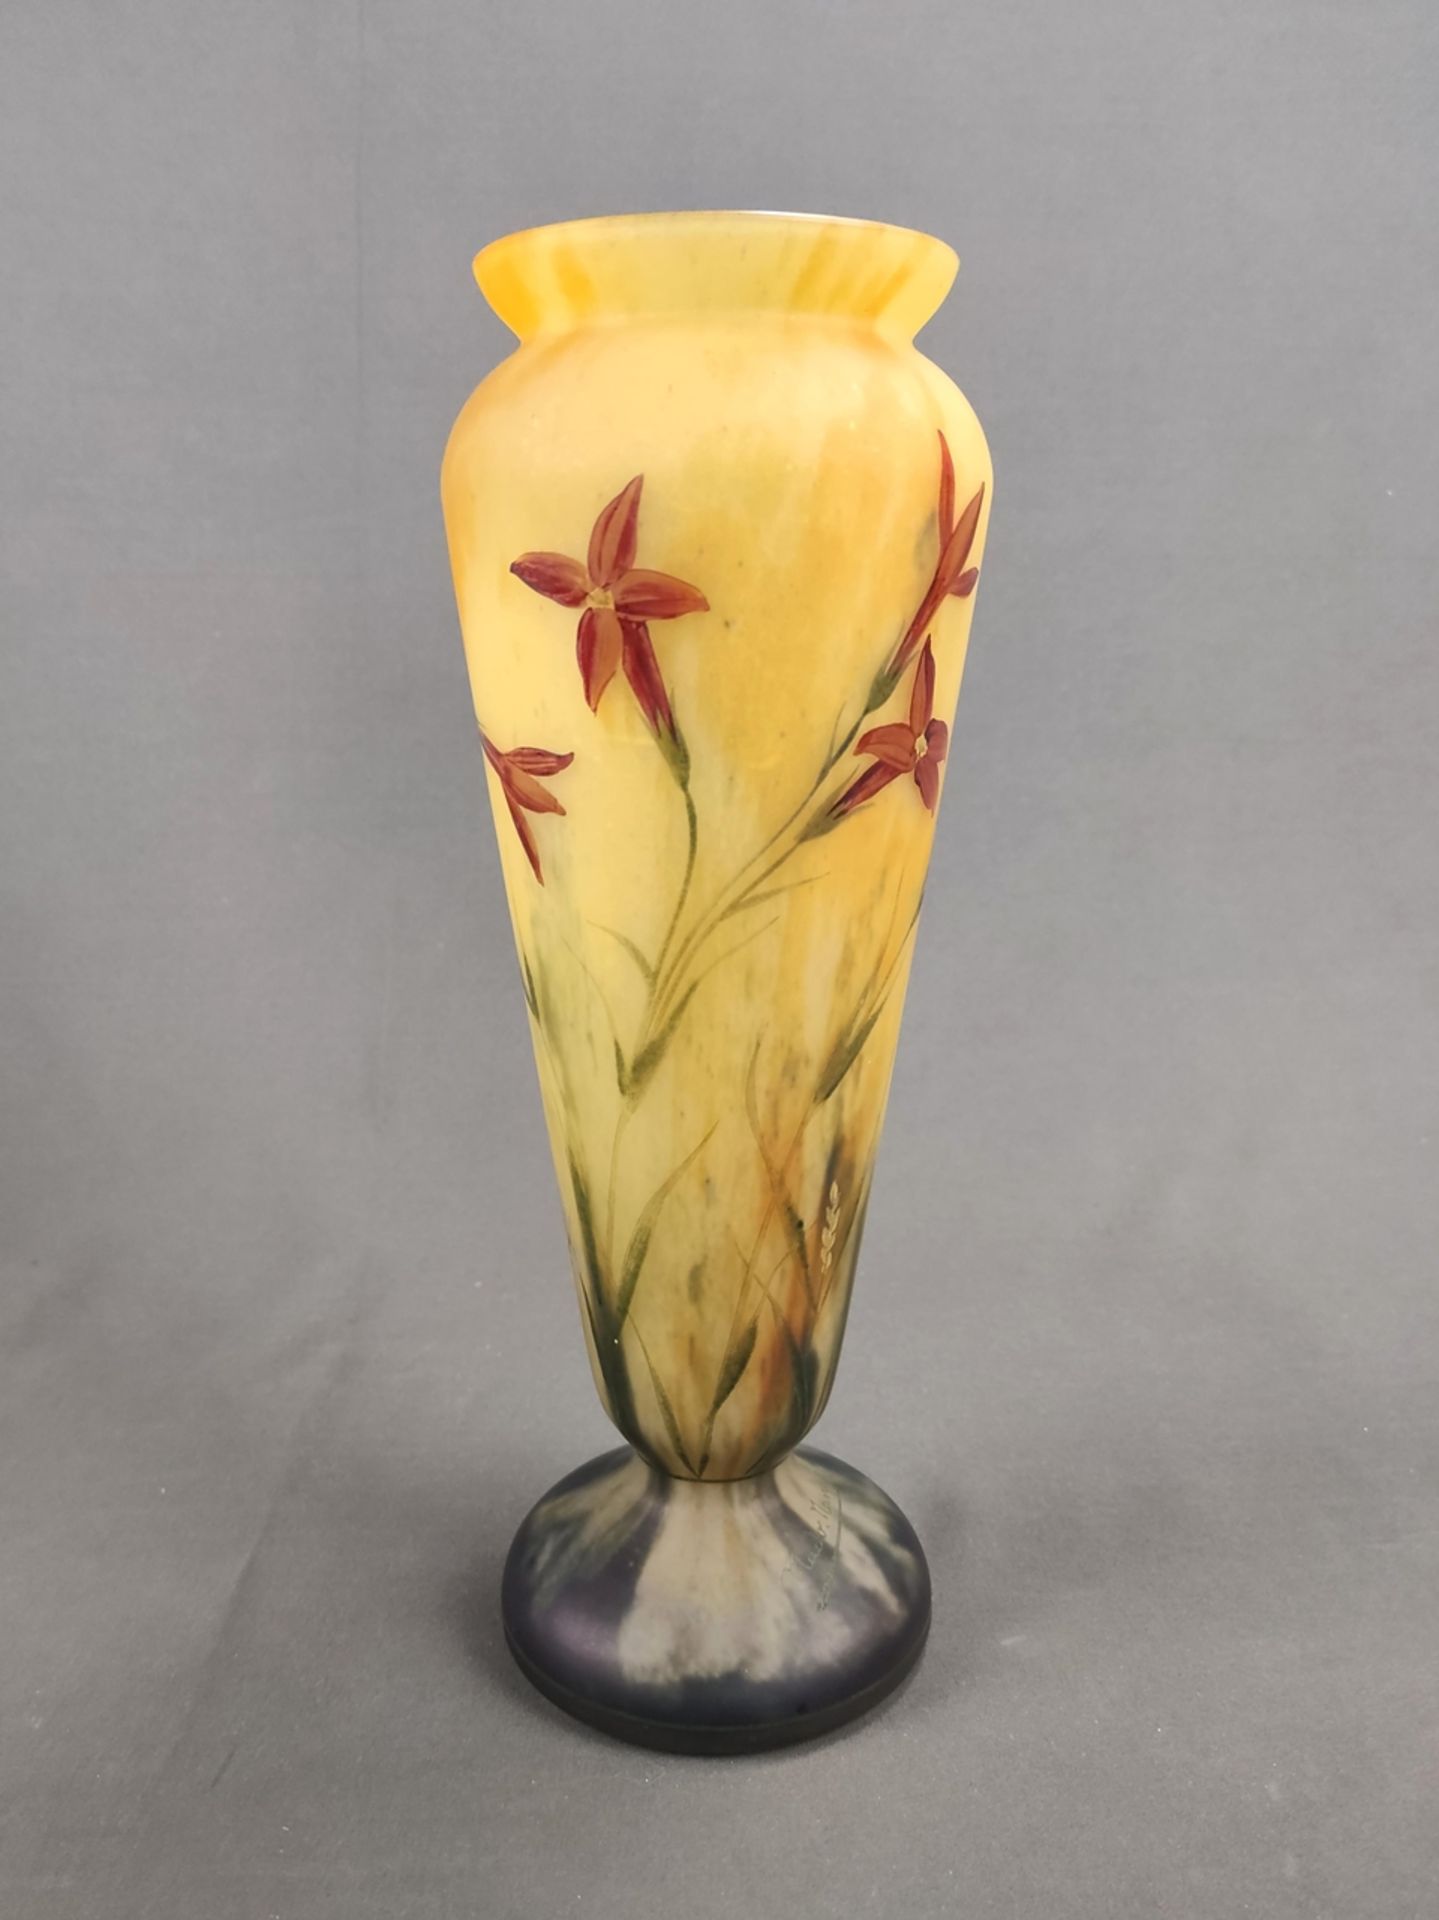 Vase Verrerie Belle Étoile, Croismare, c. 1930, colourless glass with orange-yellow powder fusion, 